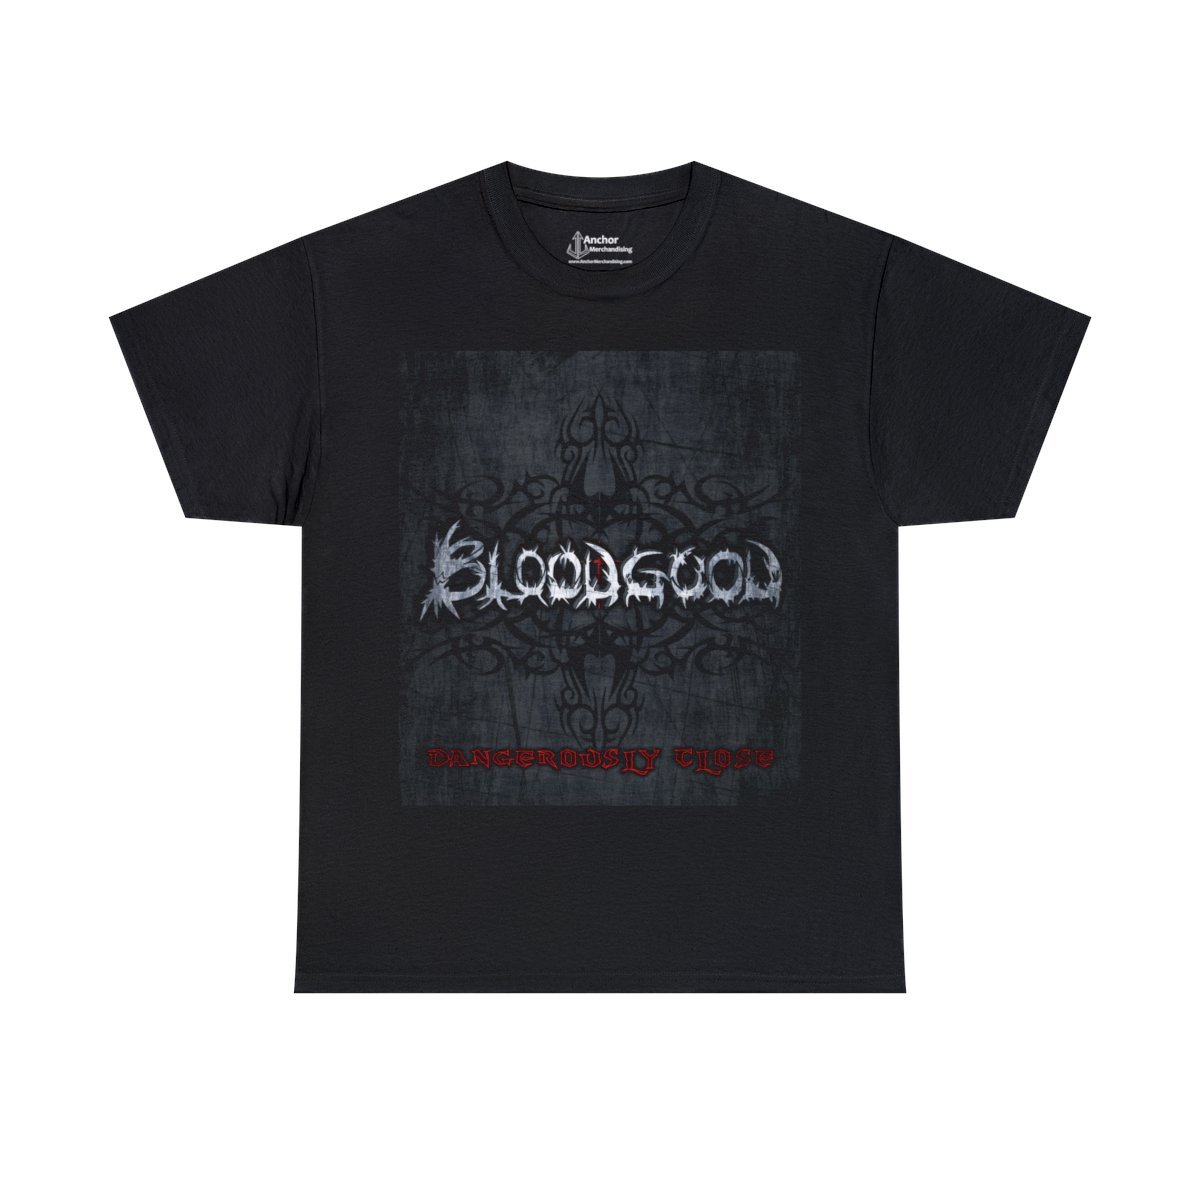 Bloodgood – Dangerously Close Grunge Version Short Sleeve Tshirt